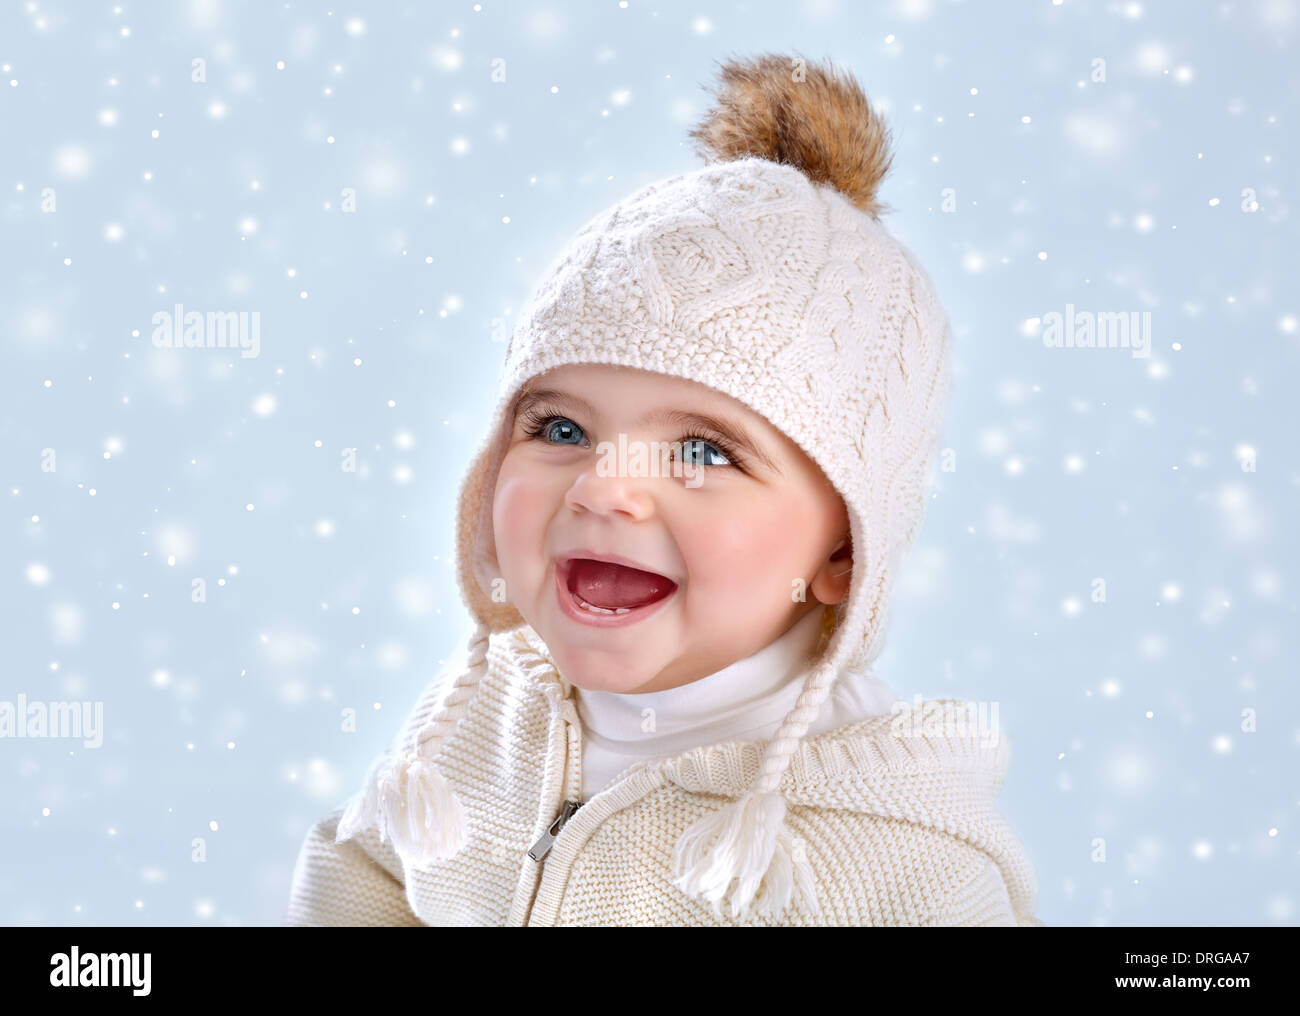 Portrait of cute little baby girl wearing warm stylish hat isolated on blue snowy background, snow falling, winter season Stock Photo